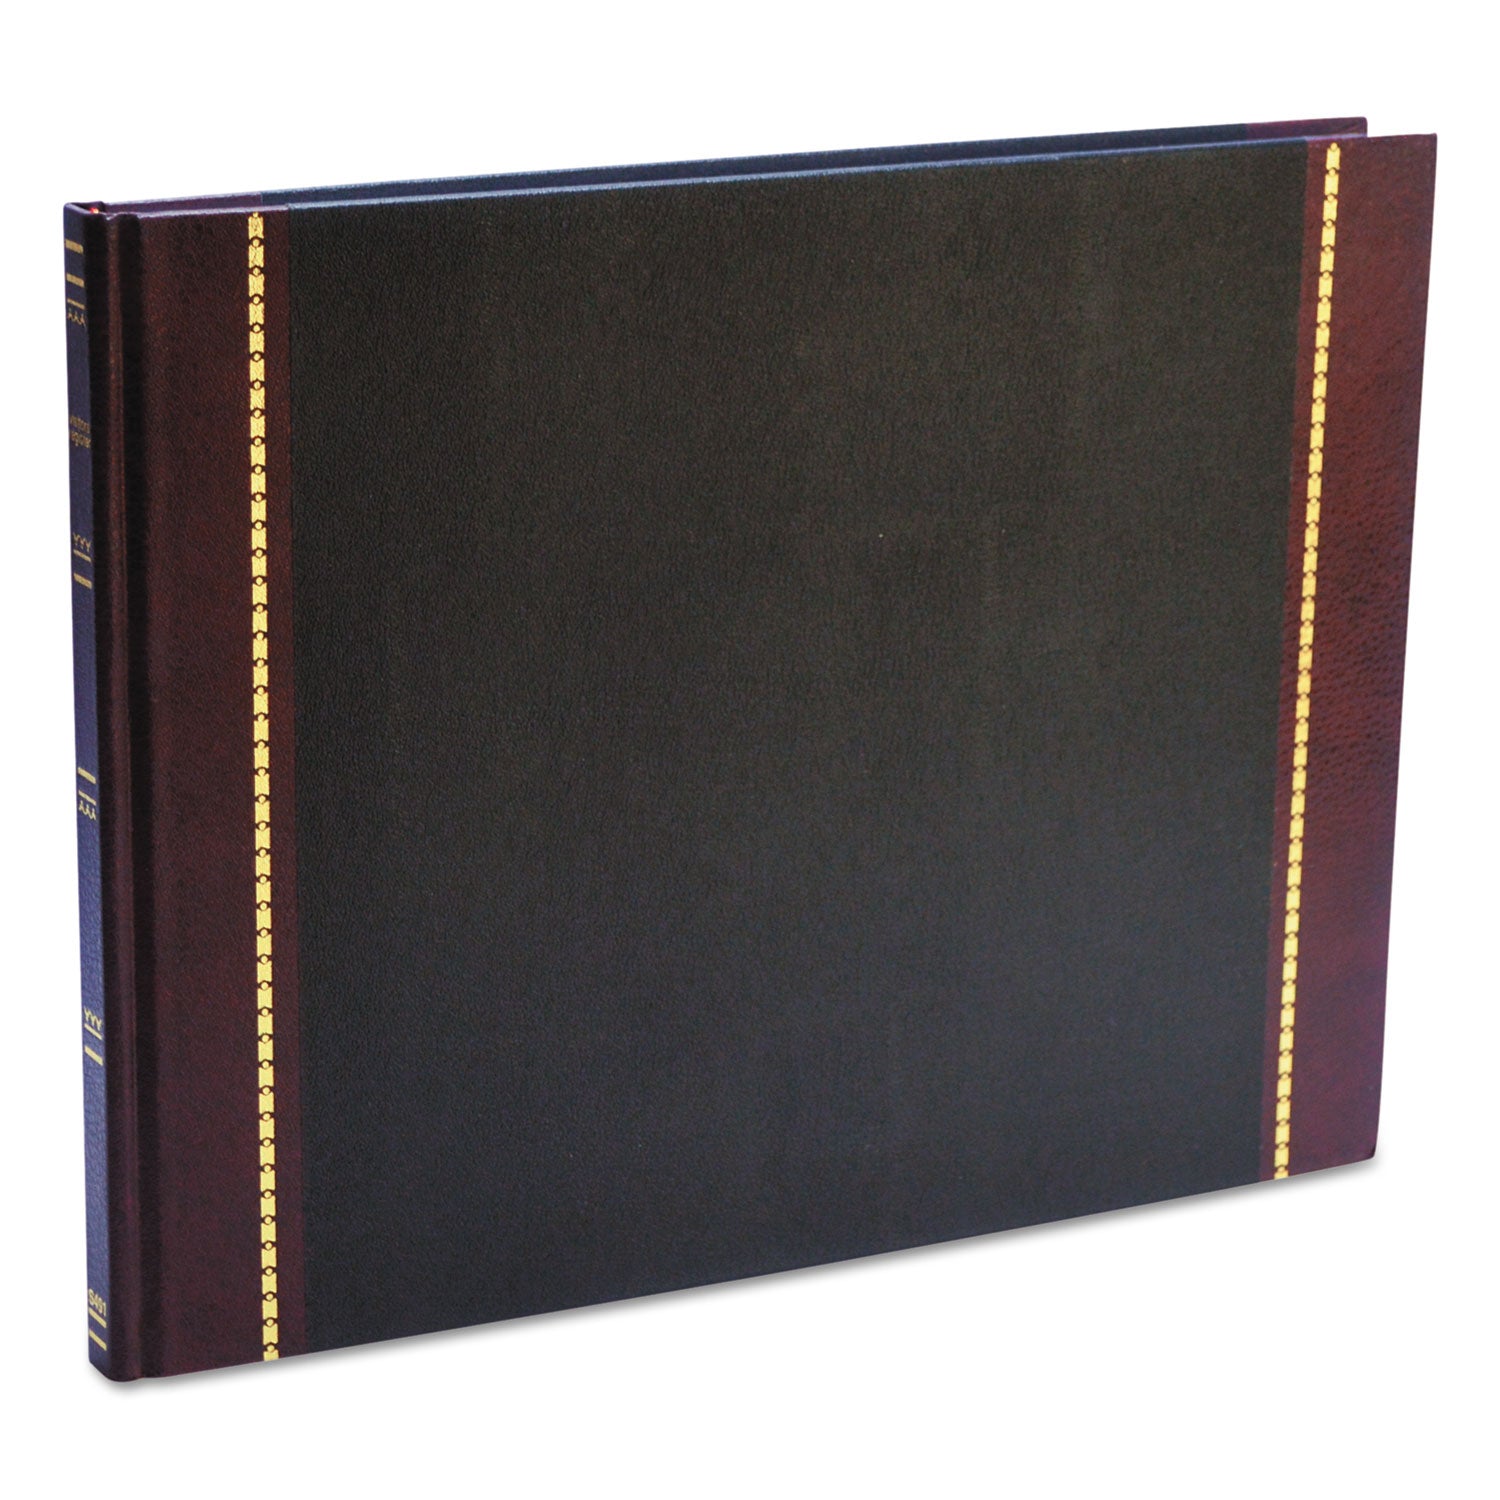 Detailed Visitor Register Book, 8 Column Format, Black Cover, 12.25 x 9.5 Sheets, 208 Sheets/Book - 